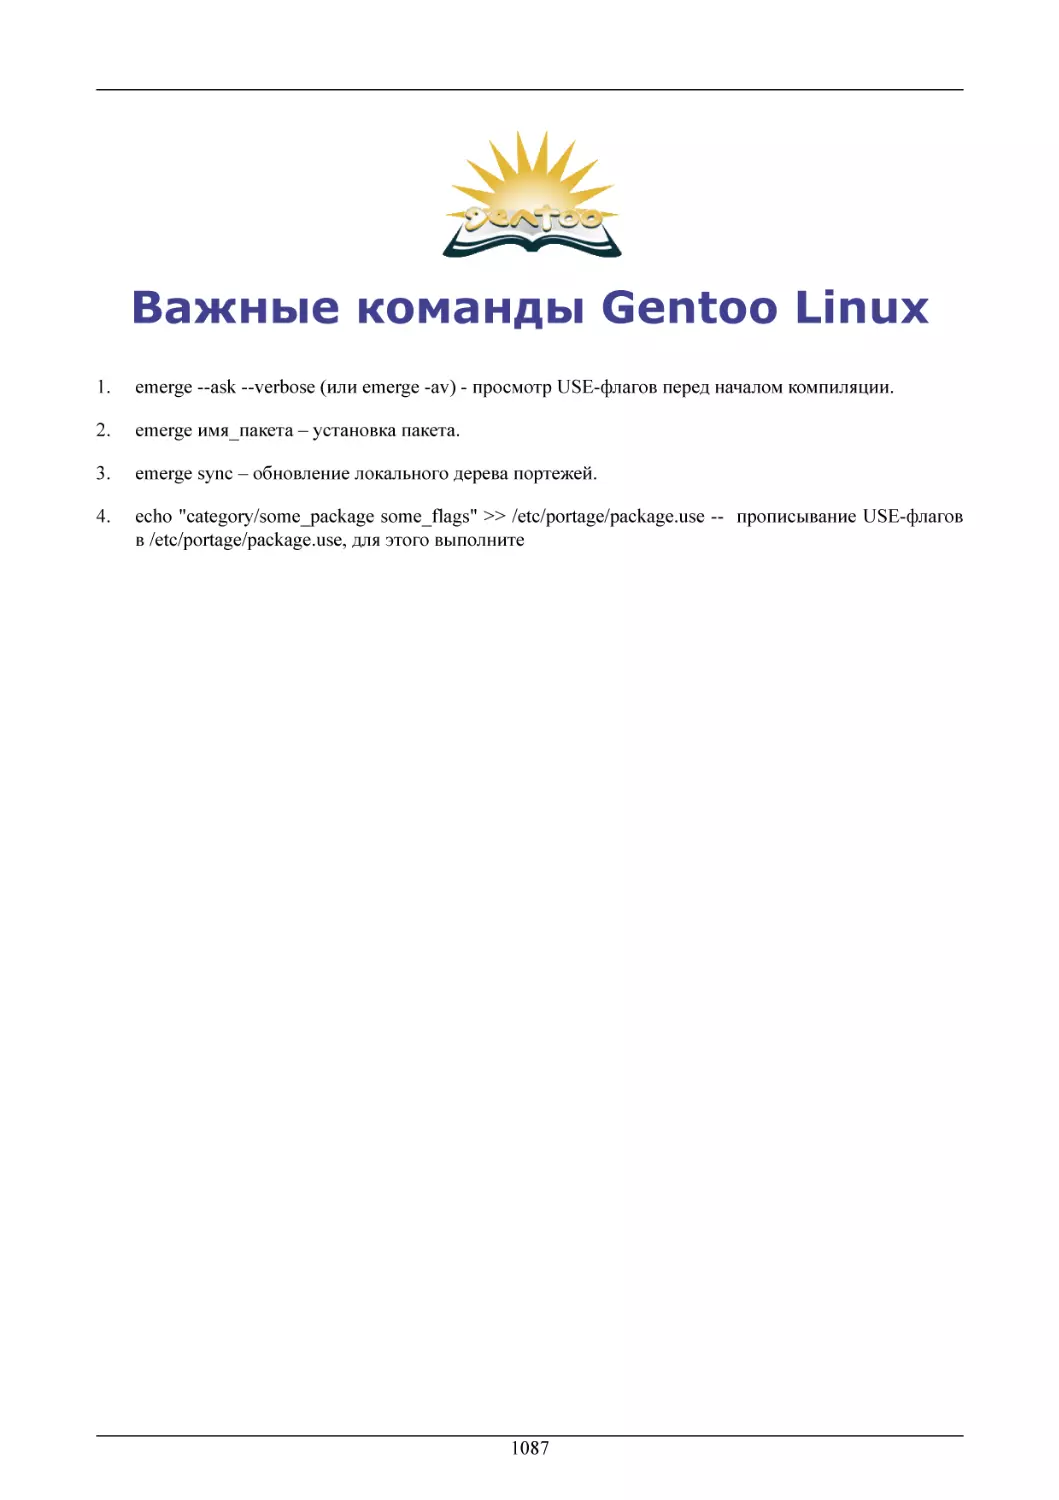 Важные команды Gentoo Linux